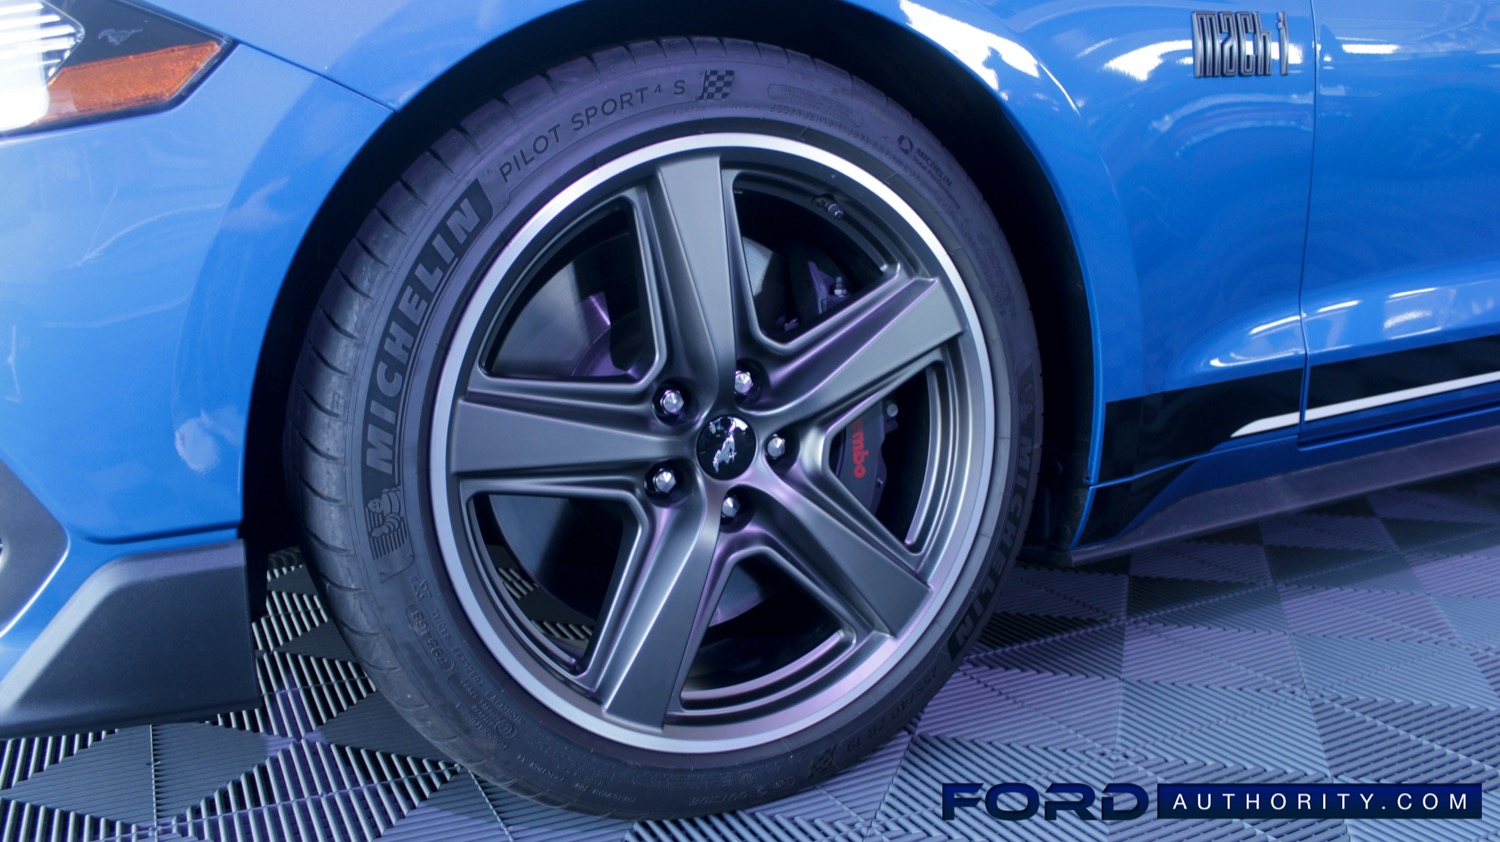 2021-Ford-Mustang-Mach-1-Exterior-Velocity-Blue-015-front-wheel-Brembo-brake-caliper.jpg